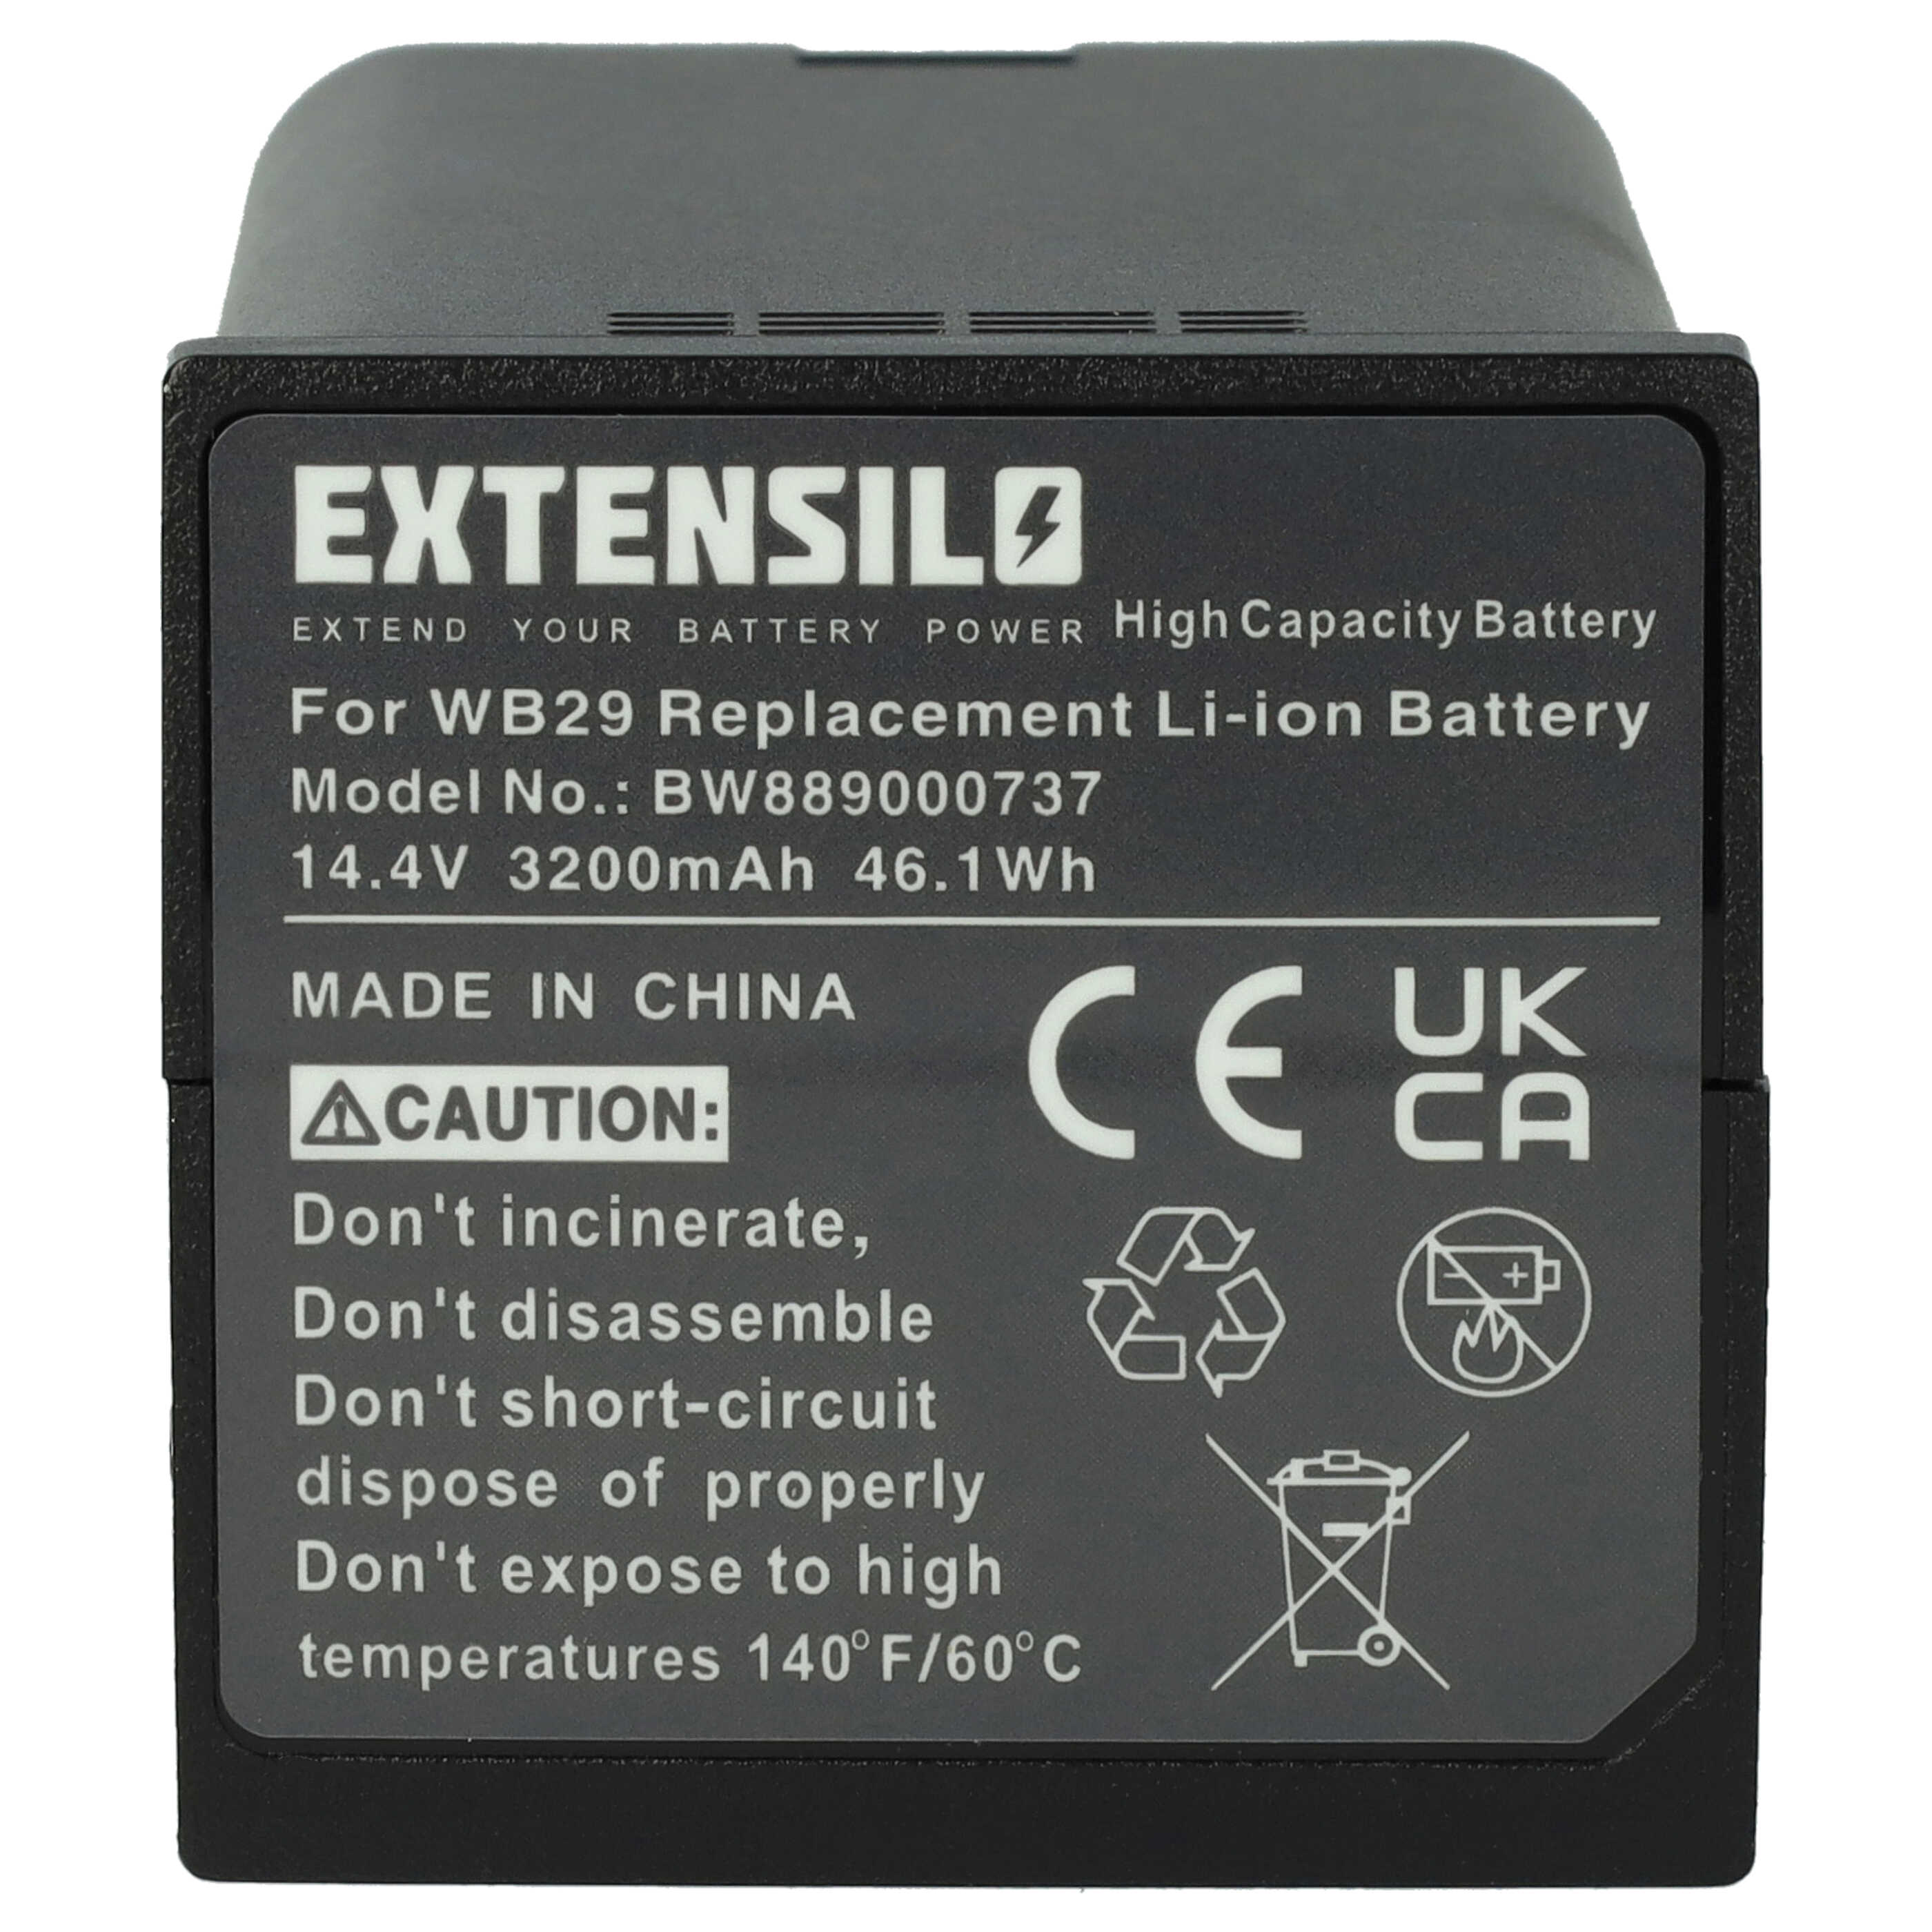 Batterie remplace Godox WB29A, W29, WB29B pour flash photo - 3200mAh 14,4V Li-ion